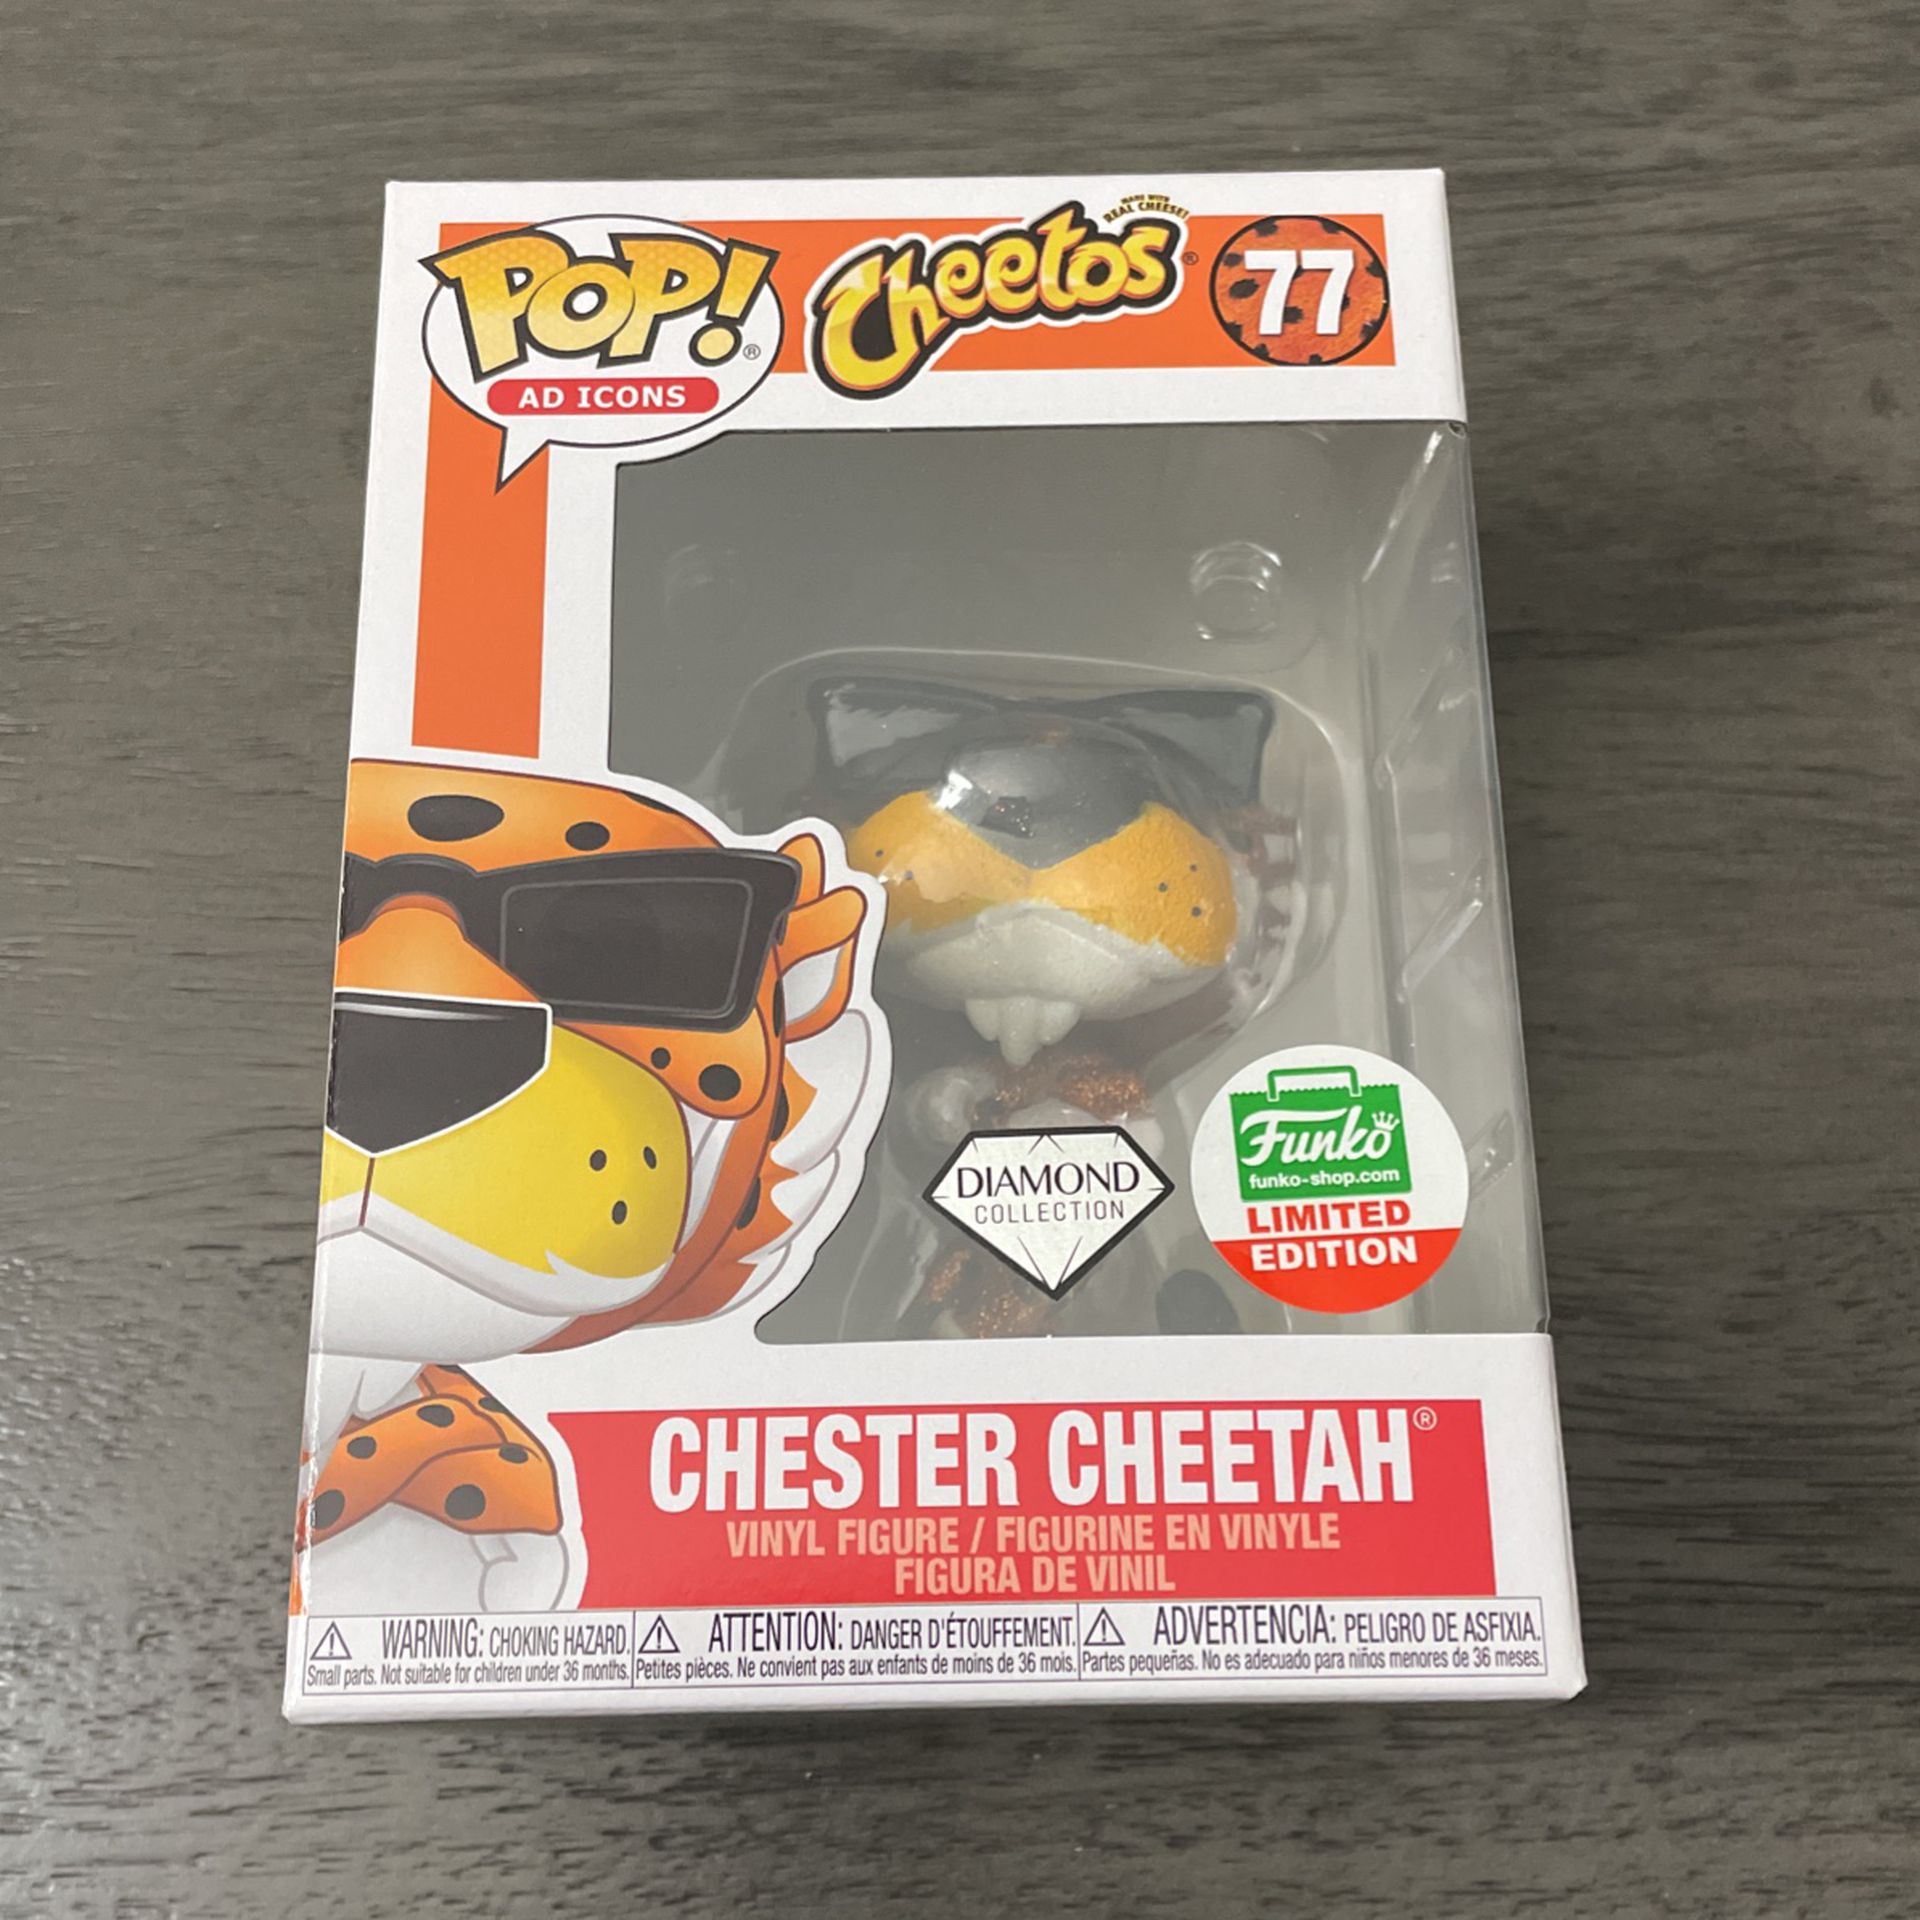 Funko Pop! Cheetos Chester Cheetah #77 Diamond Collection Funko Shop Exclusive